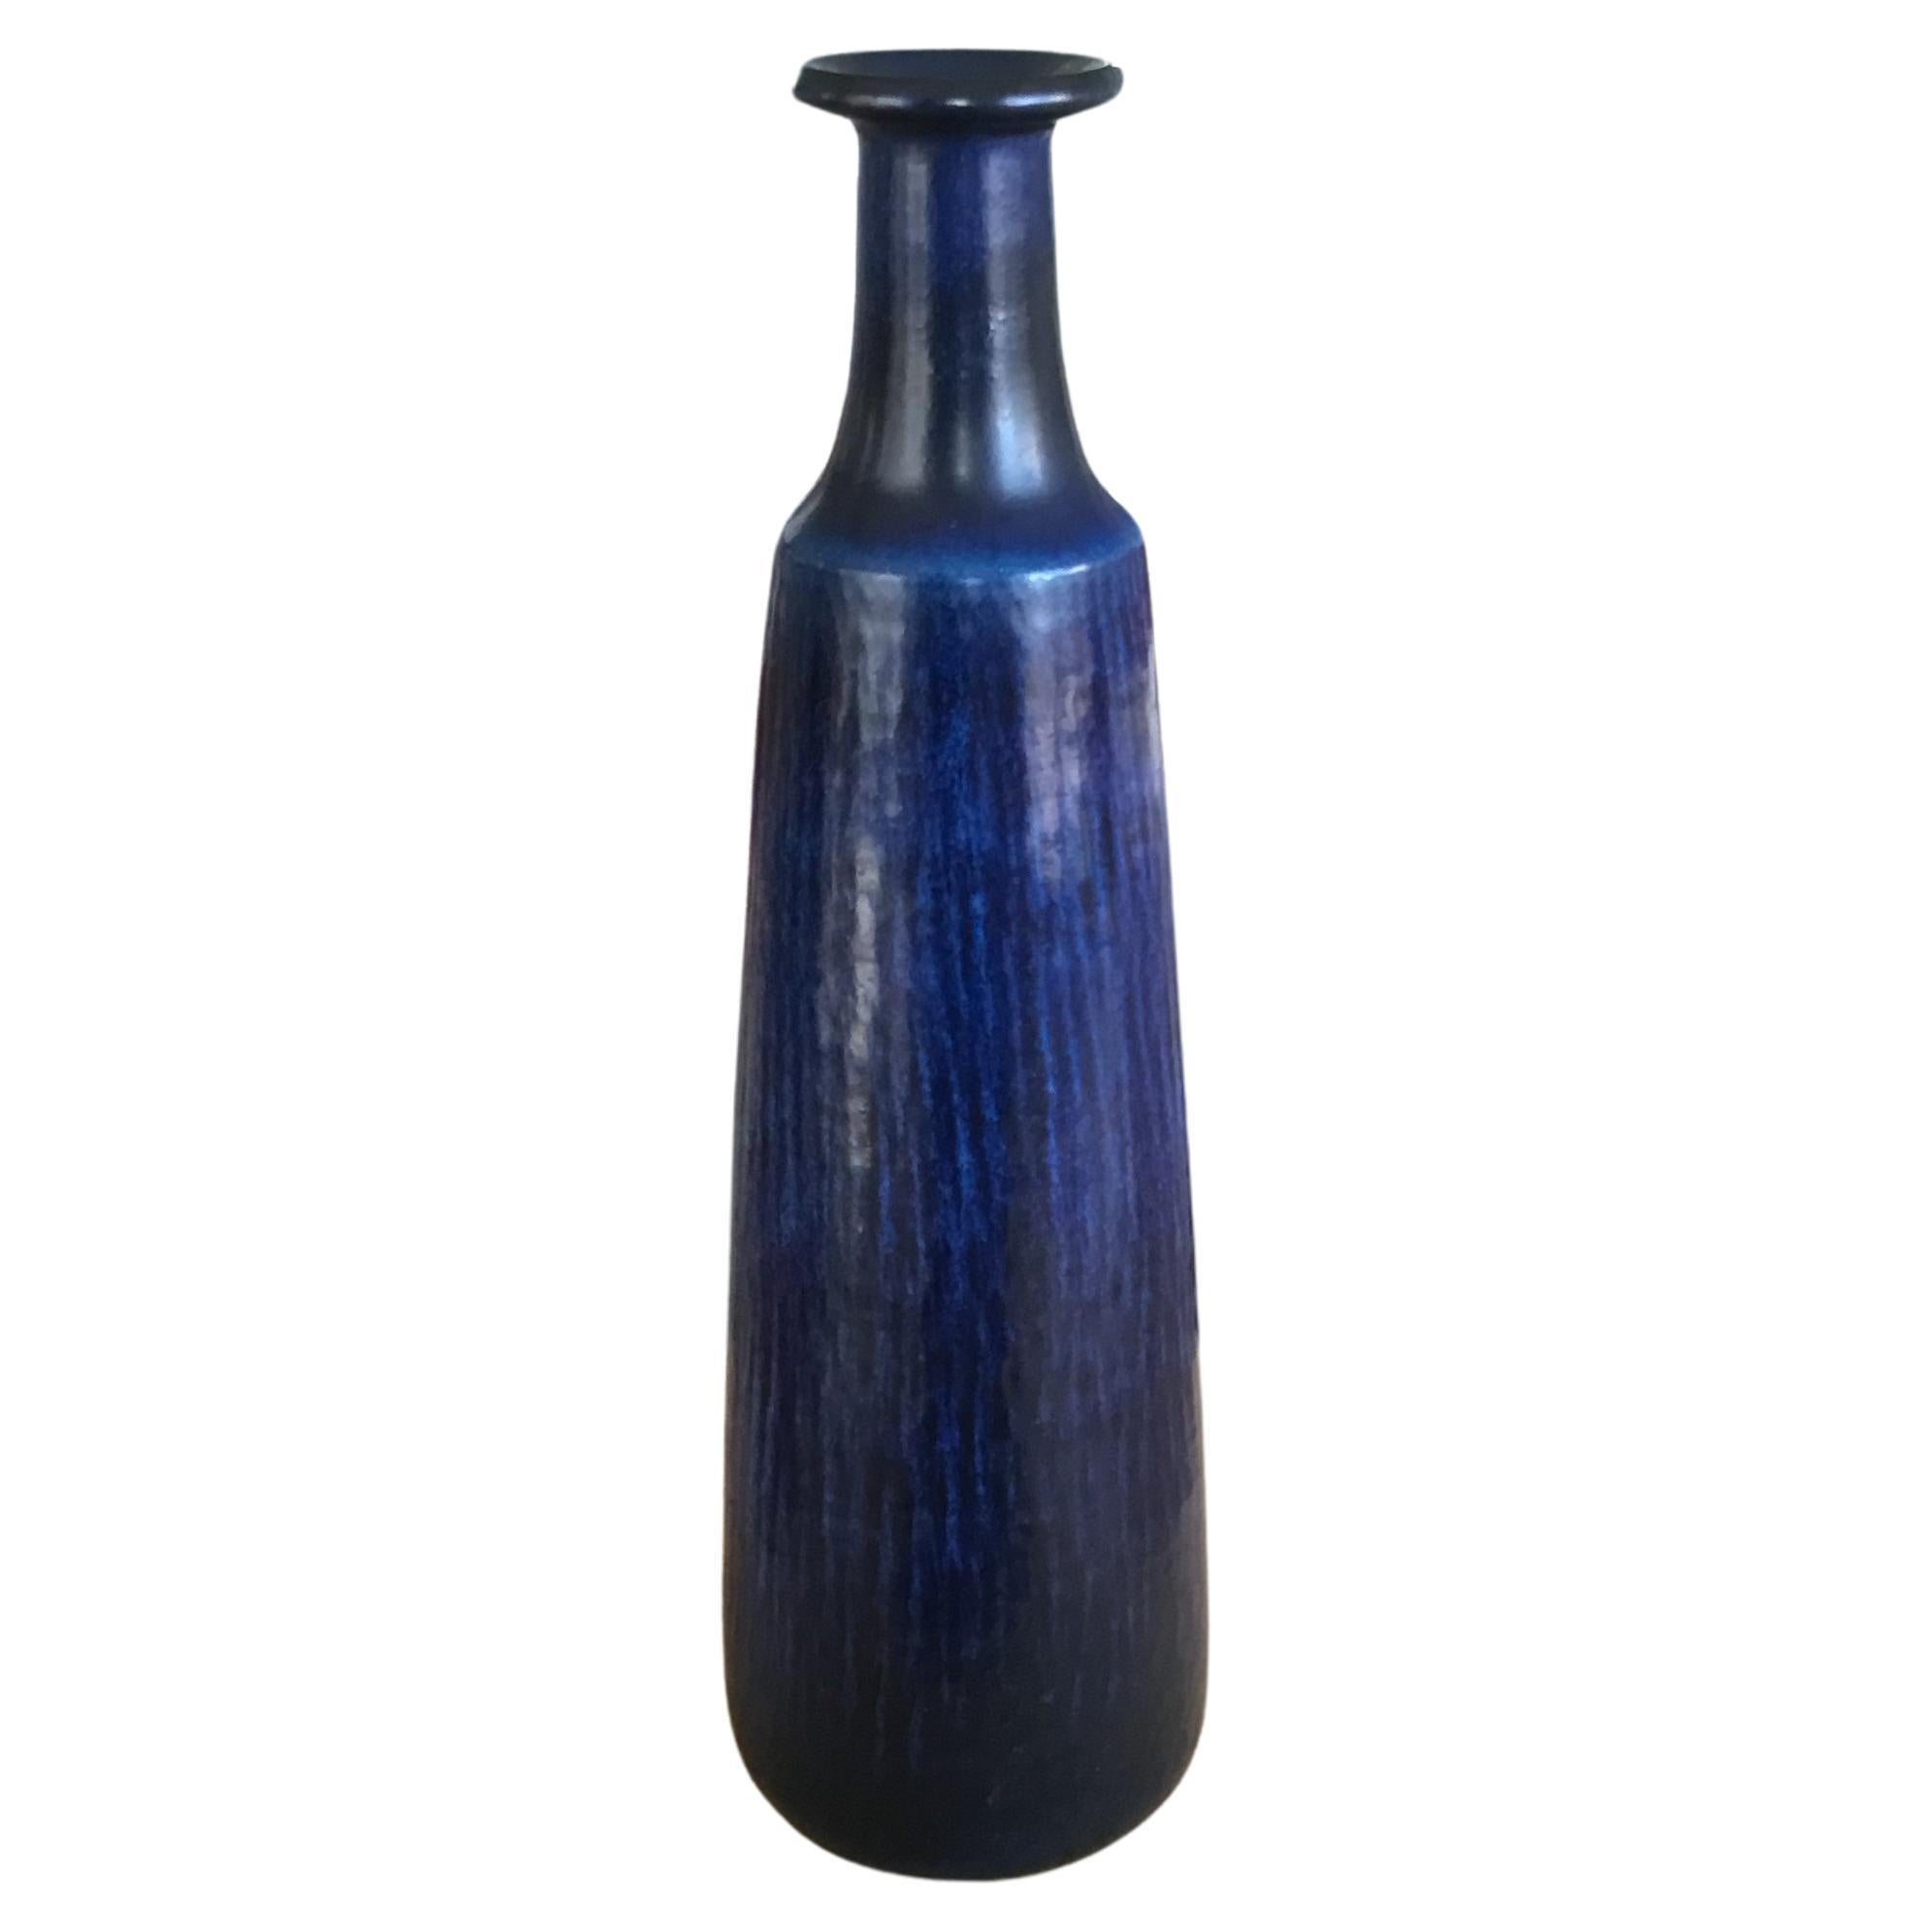 Very Tall Gunnar Nylund Vase by Nymølle with Dark Blue Glaze 1960s For Sale